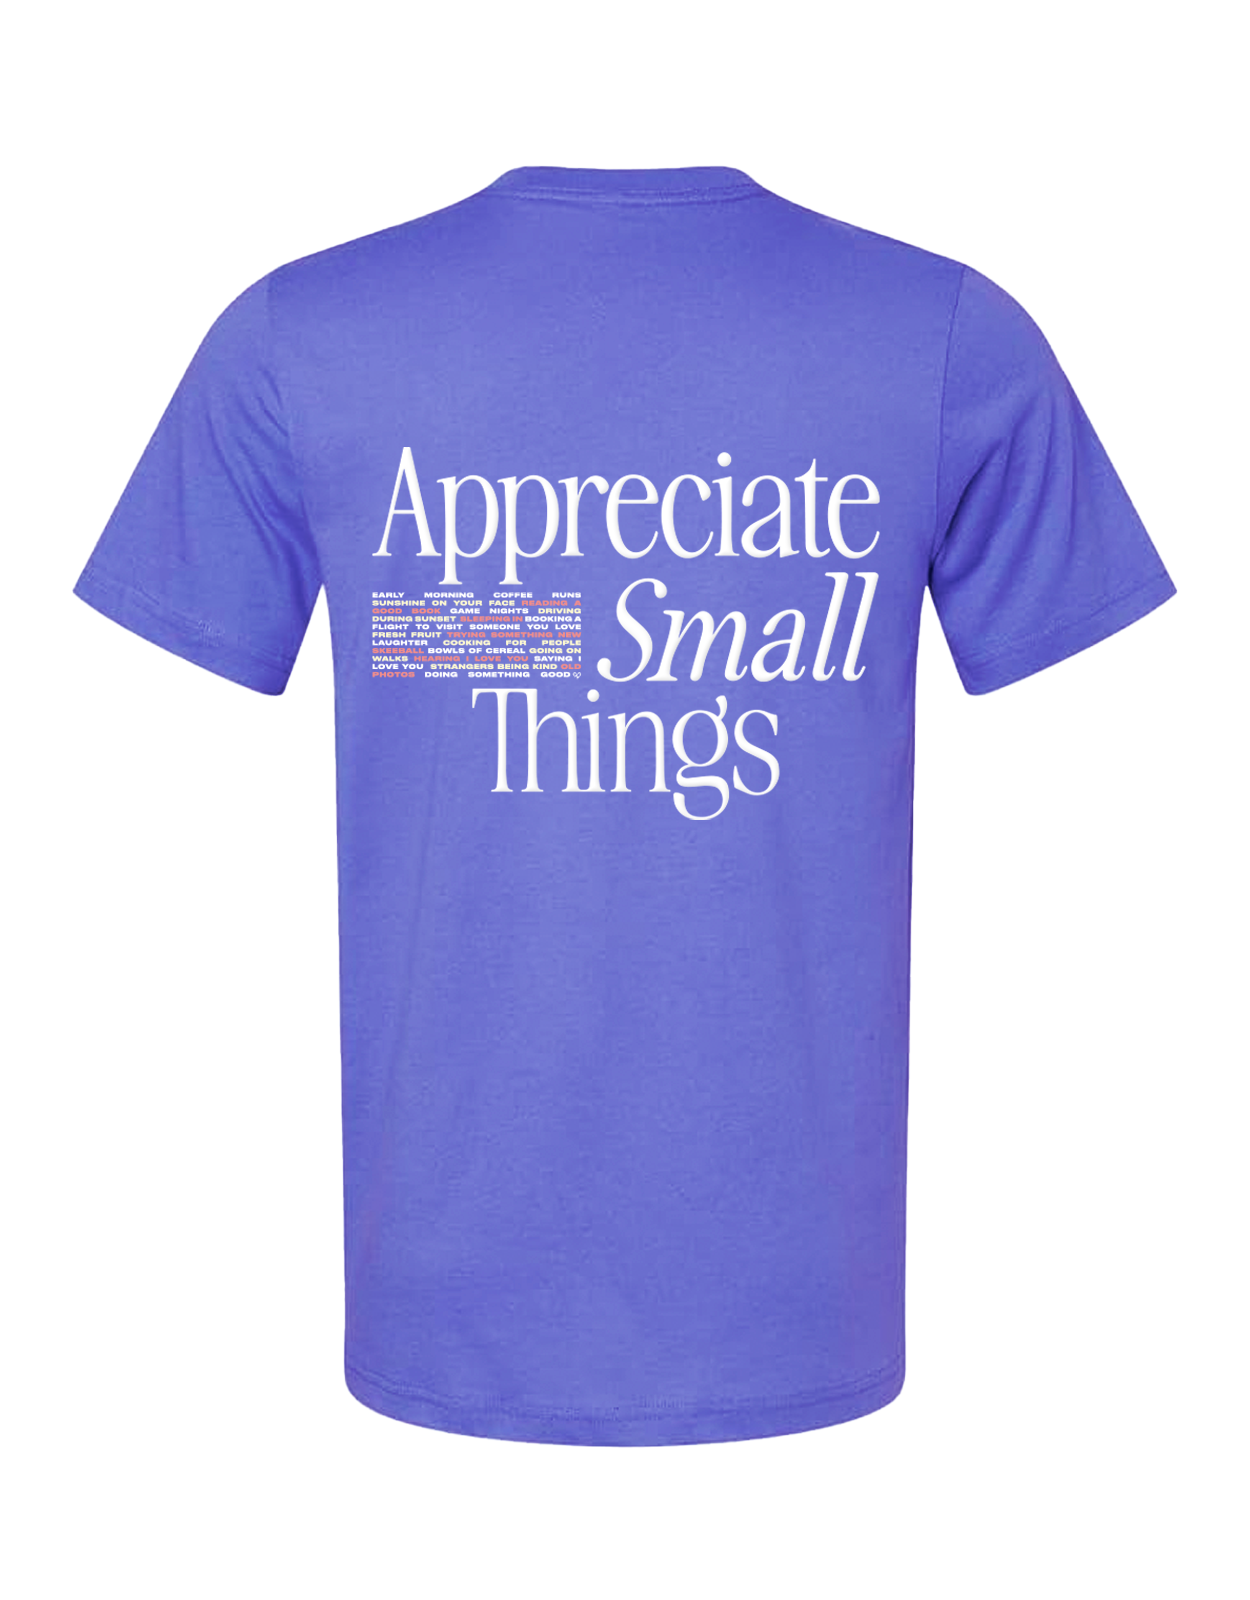 Appreciate Small Things Tee